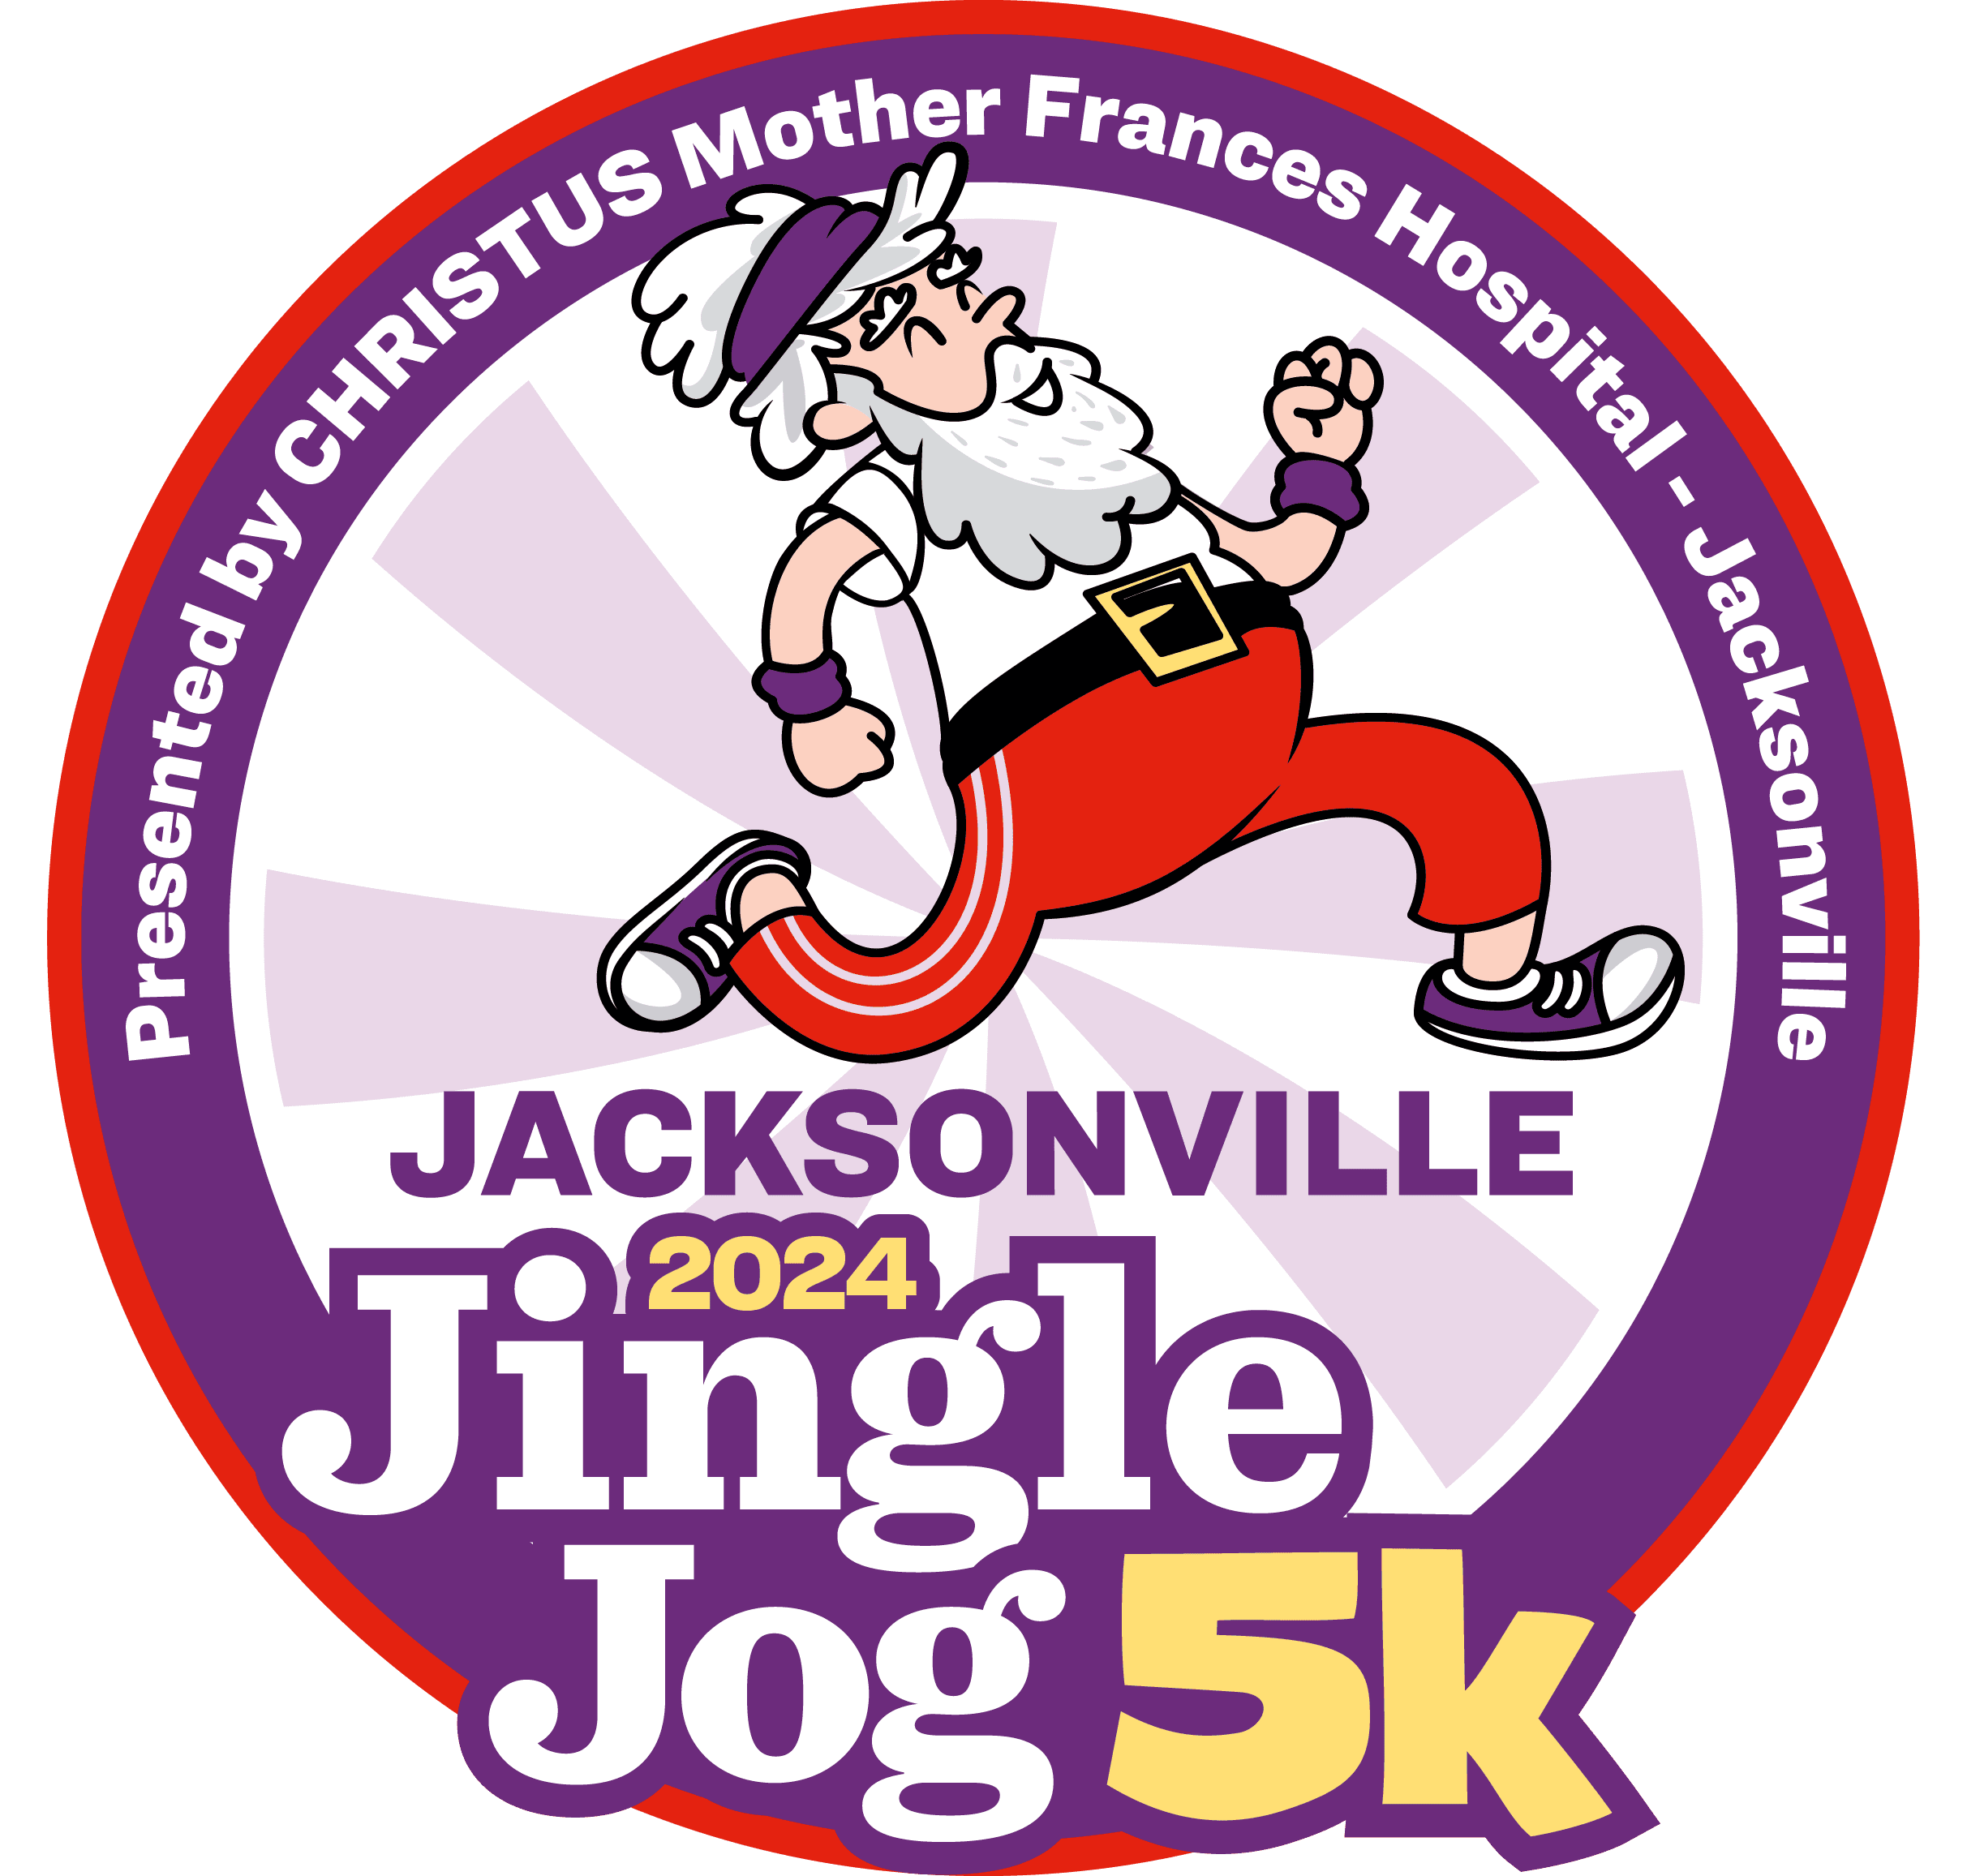 CHRISTUS Mother Frances Hospital - Jacksonville Jingle Jog 5K & Fun Run 2024